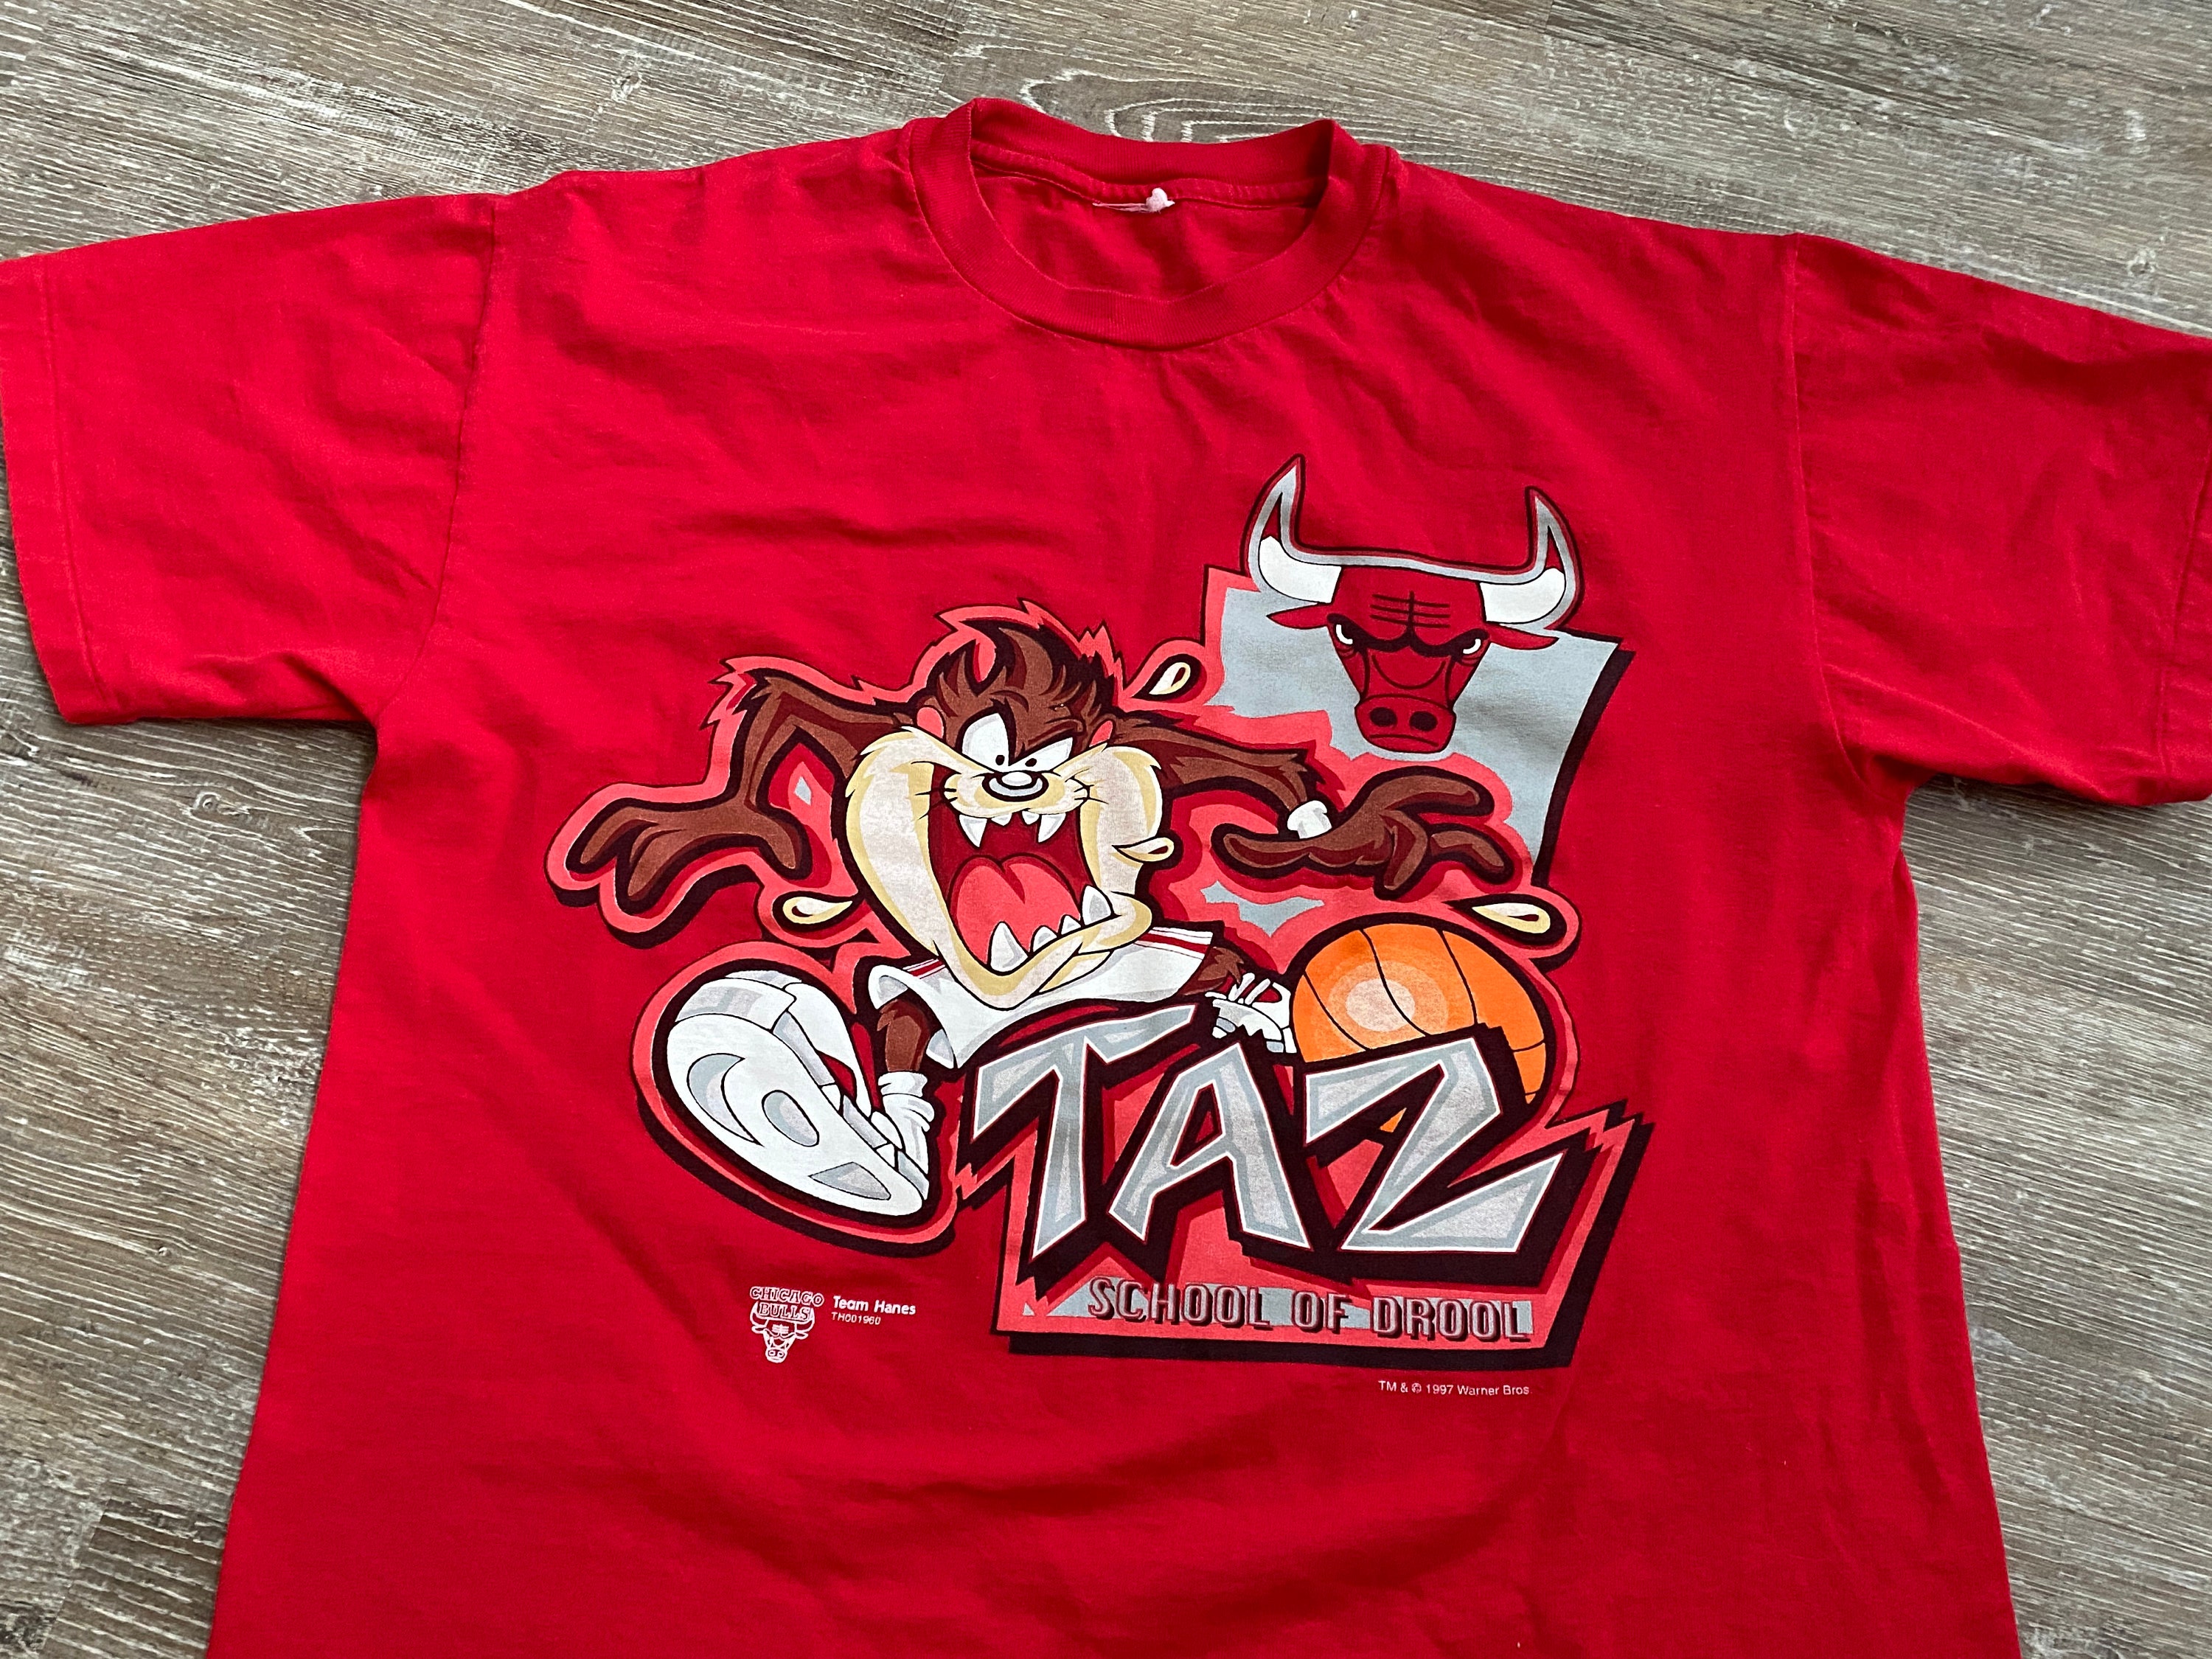 Wyco Vintage 1988 Chicago Bulls Fever NBA Shirt